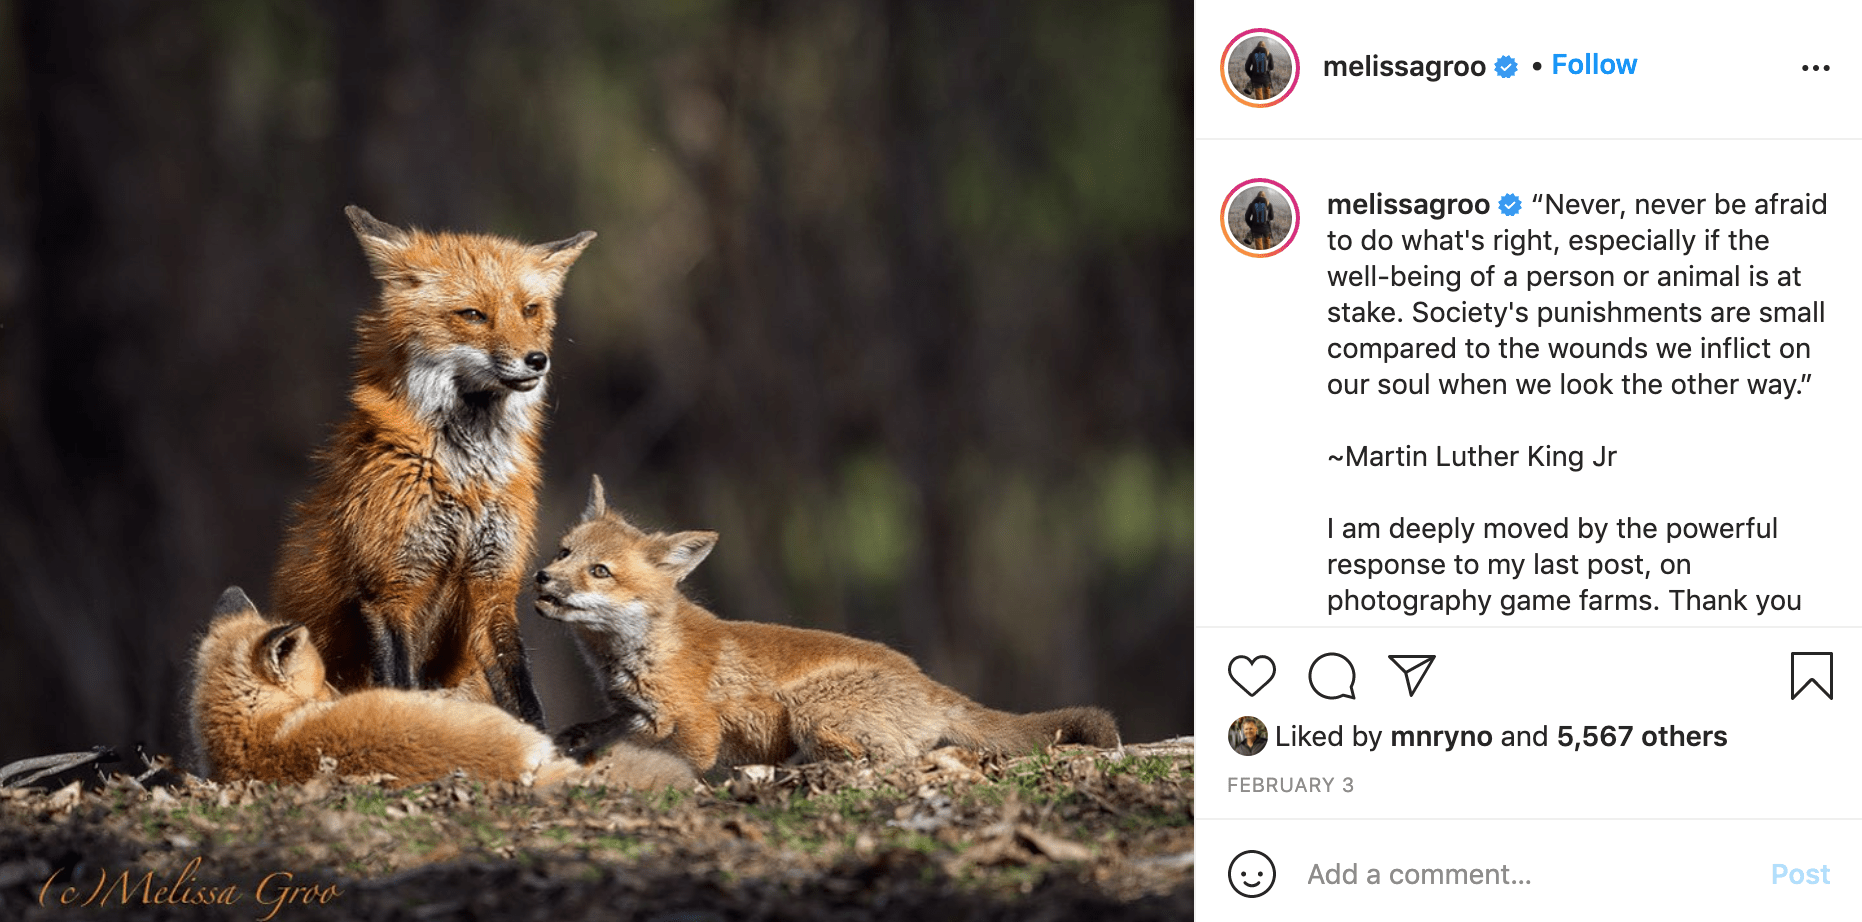 Follow Wildlife Conservation Photographer - Melissa Groo 